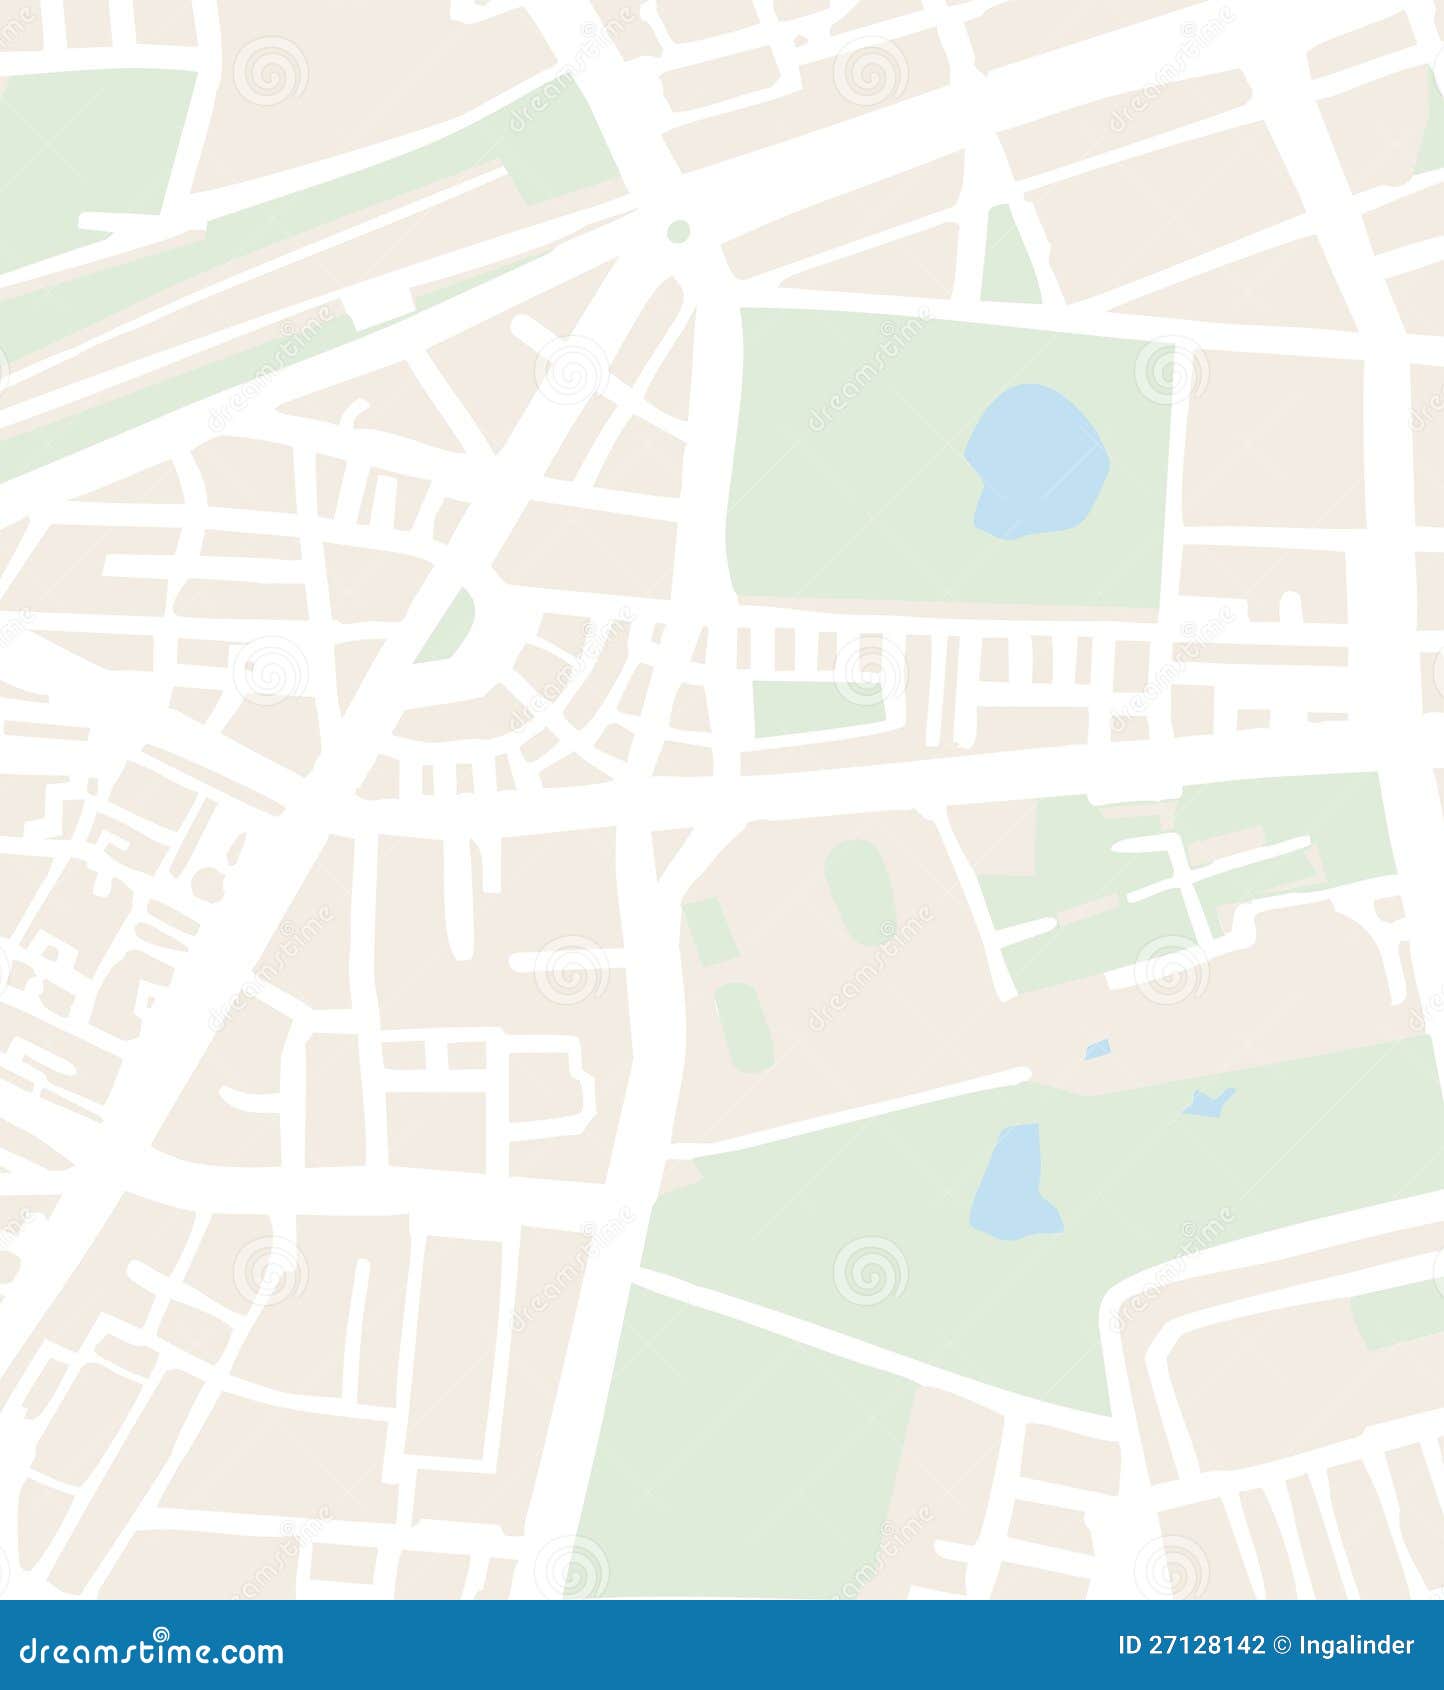 clipart street map - photo #32